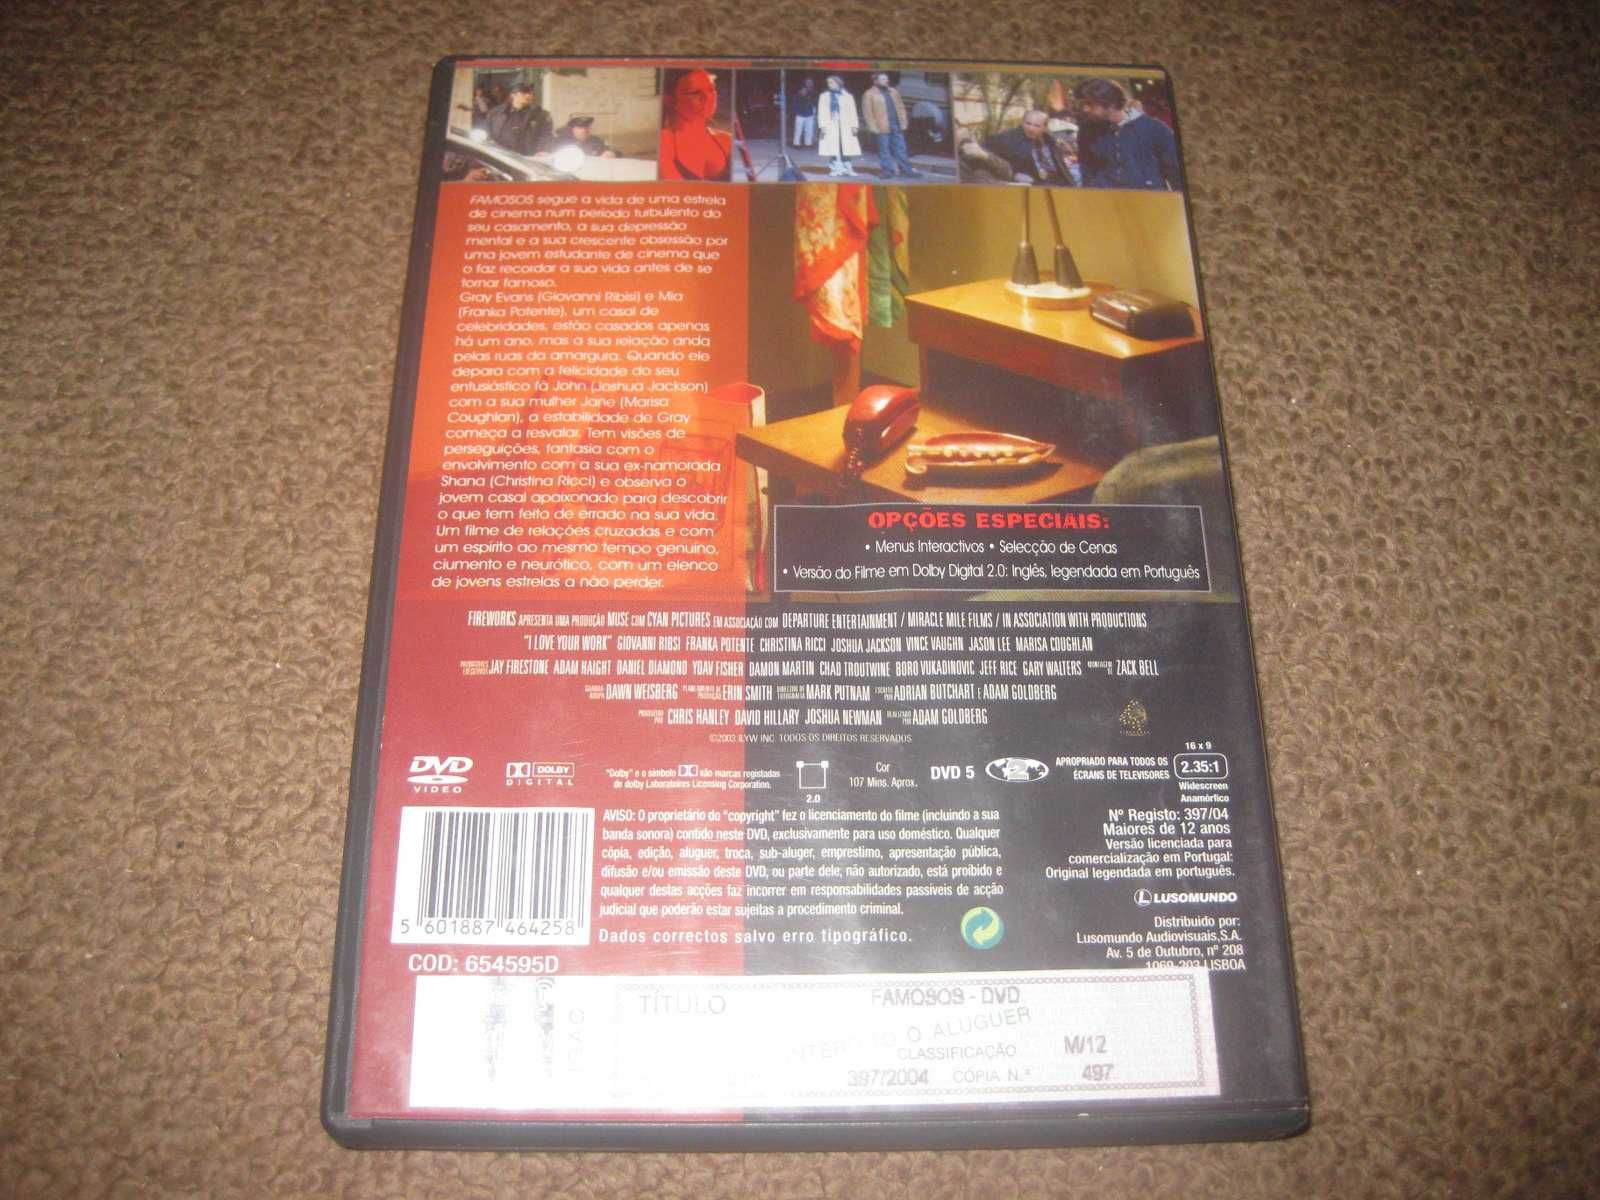 DVD "Famosos" com Vince Vaughn/Raro!